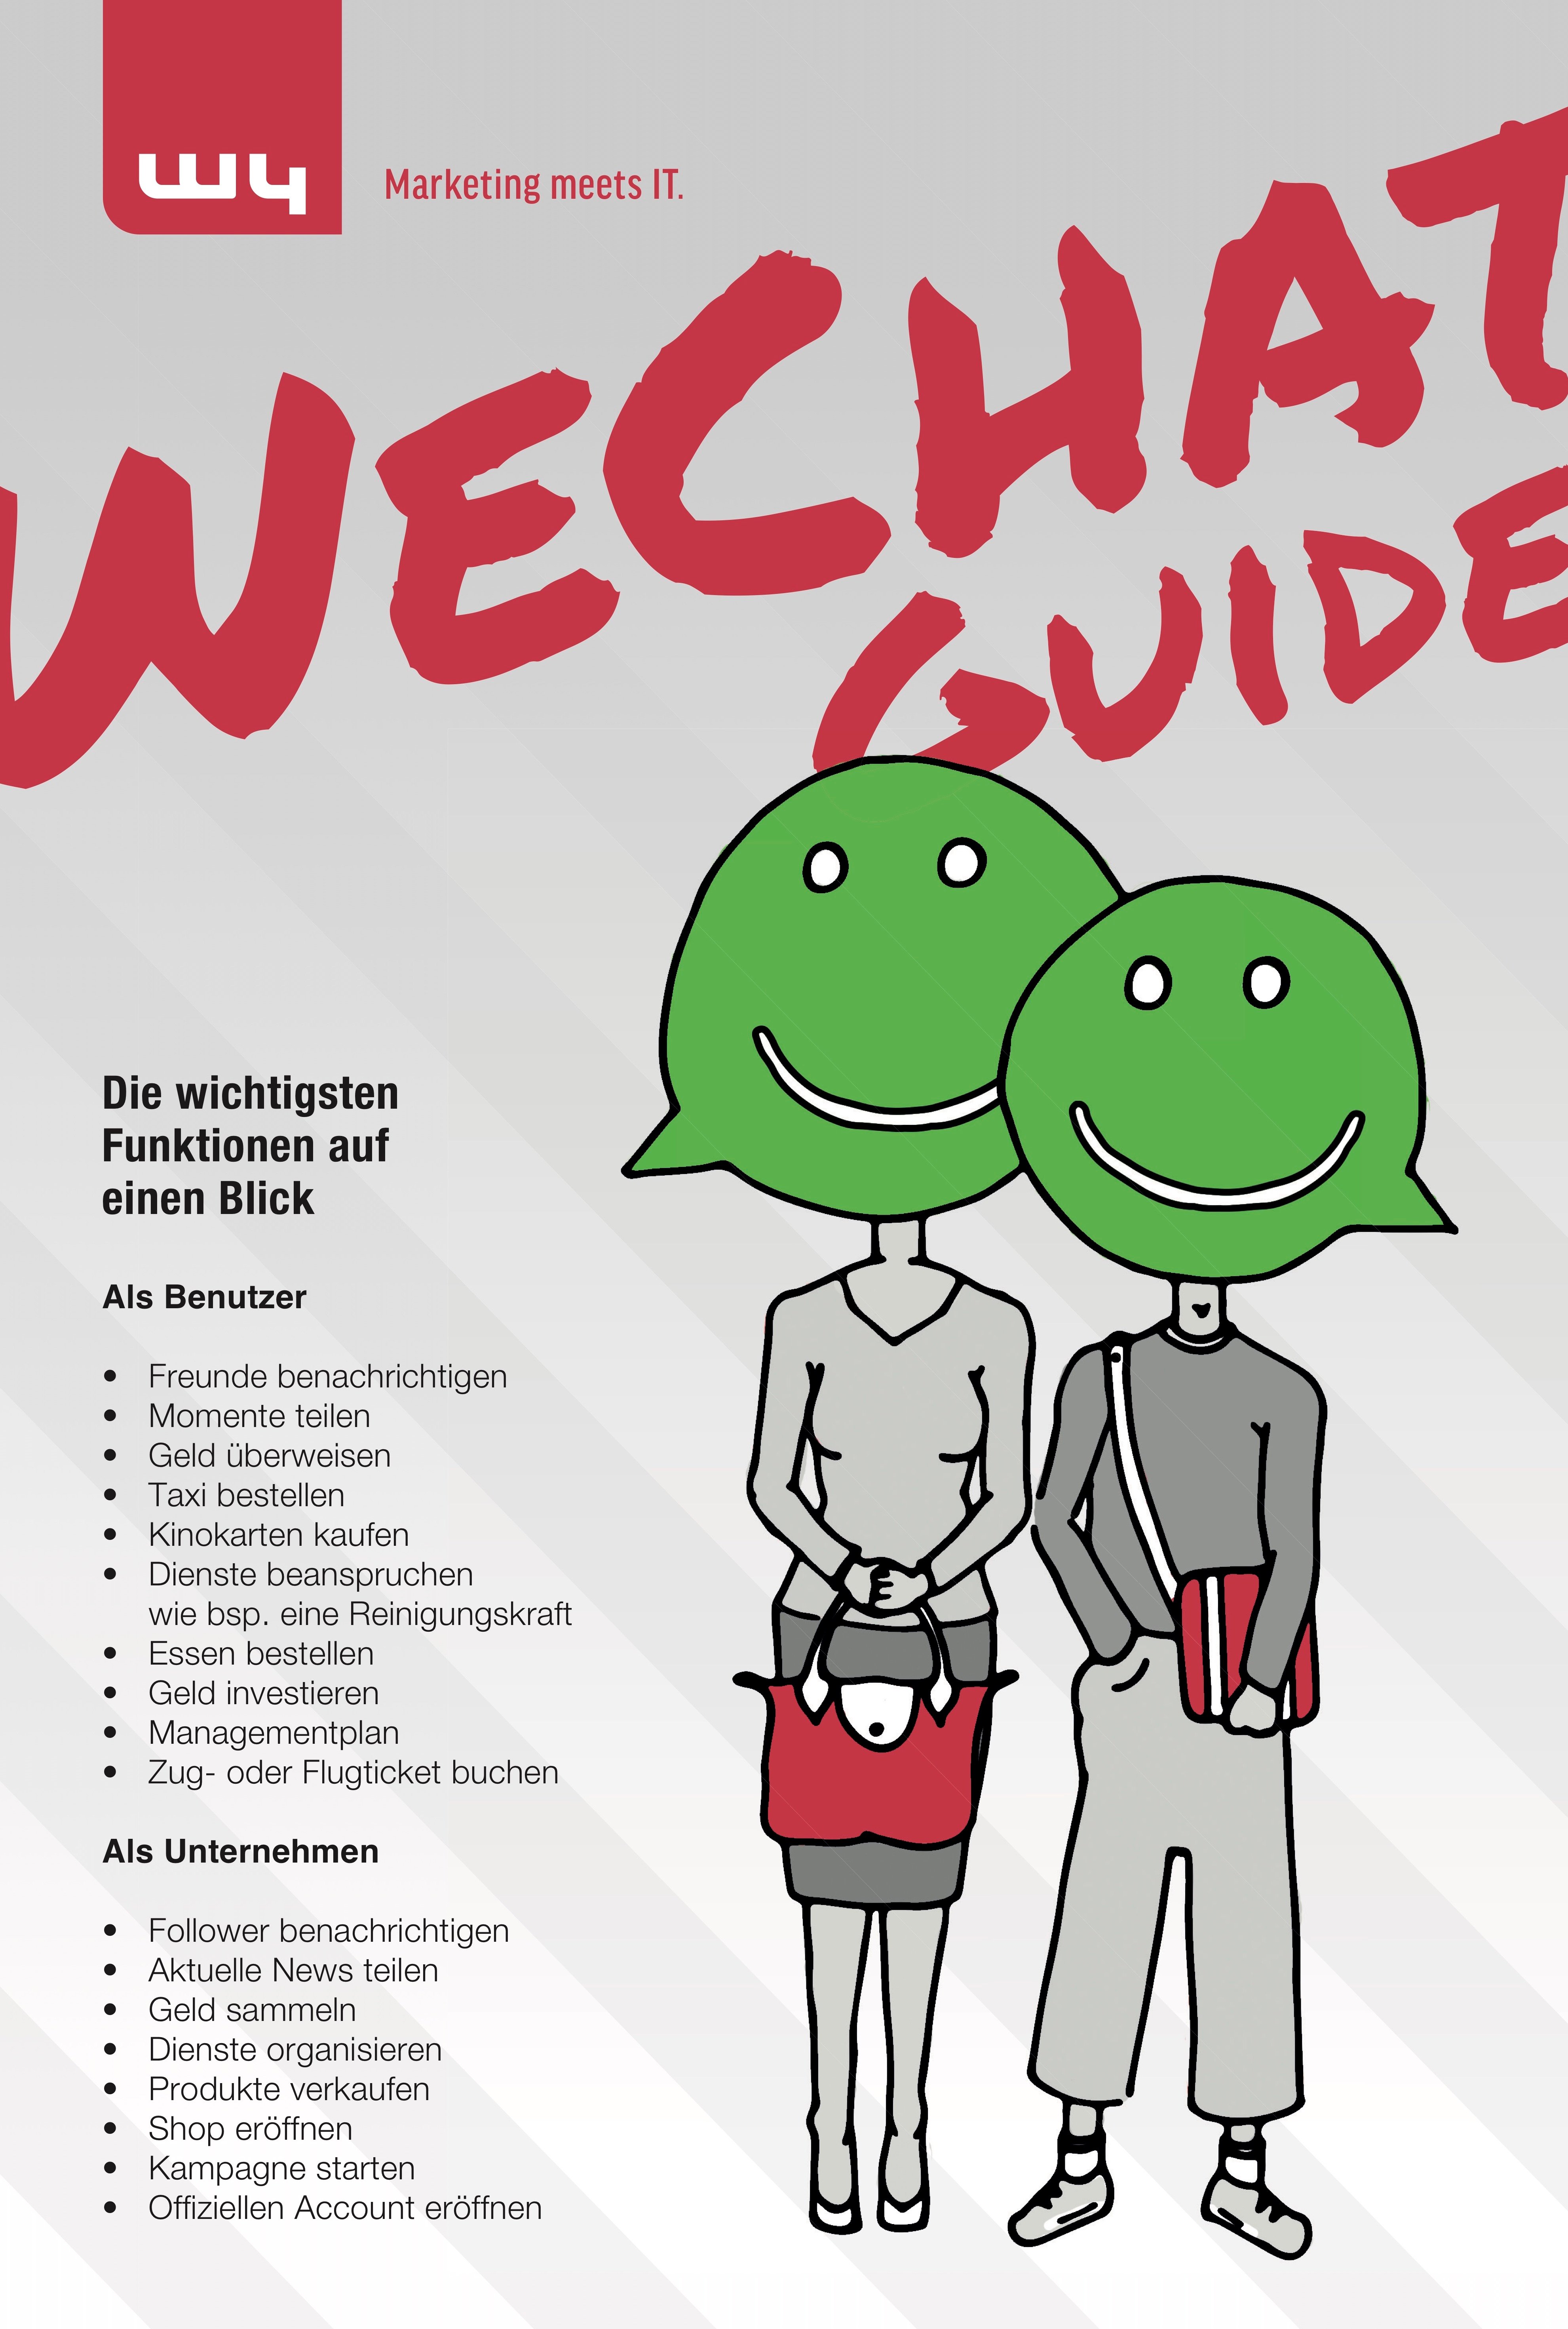 wechat marketing guide